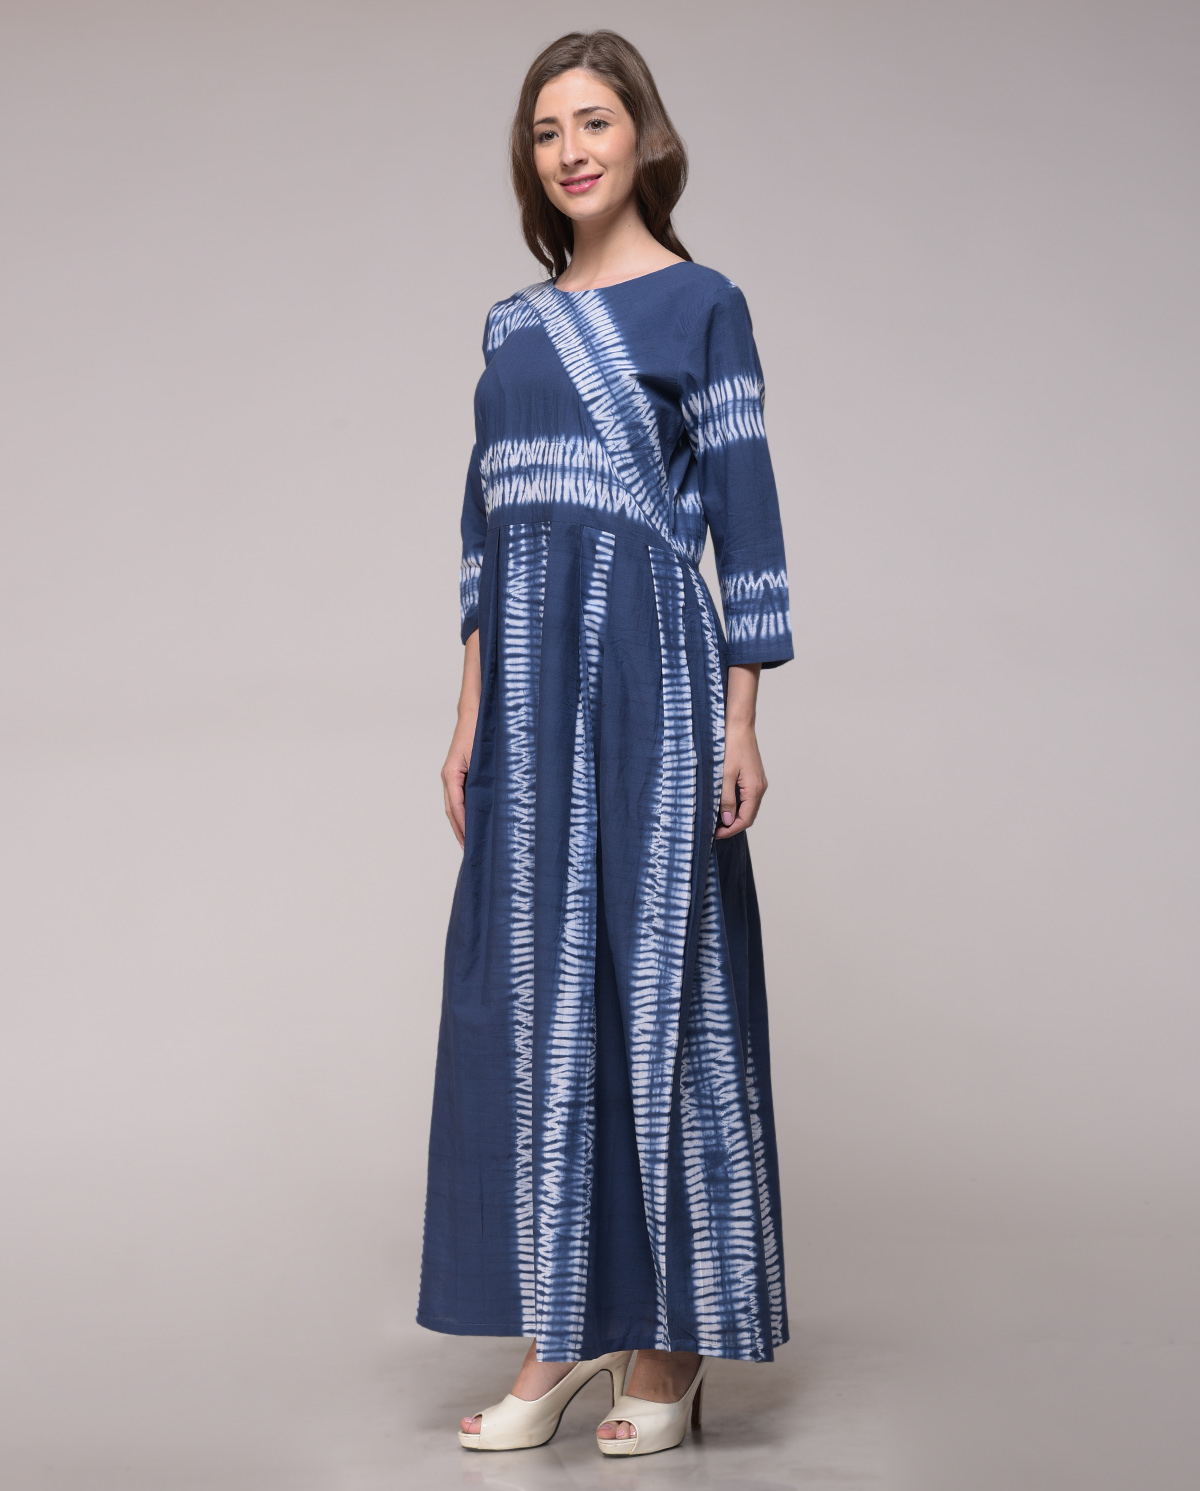 Blue Shibori Striped Dress - Dresses Women Apparel | World Art Community